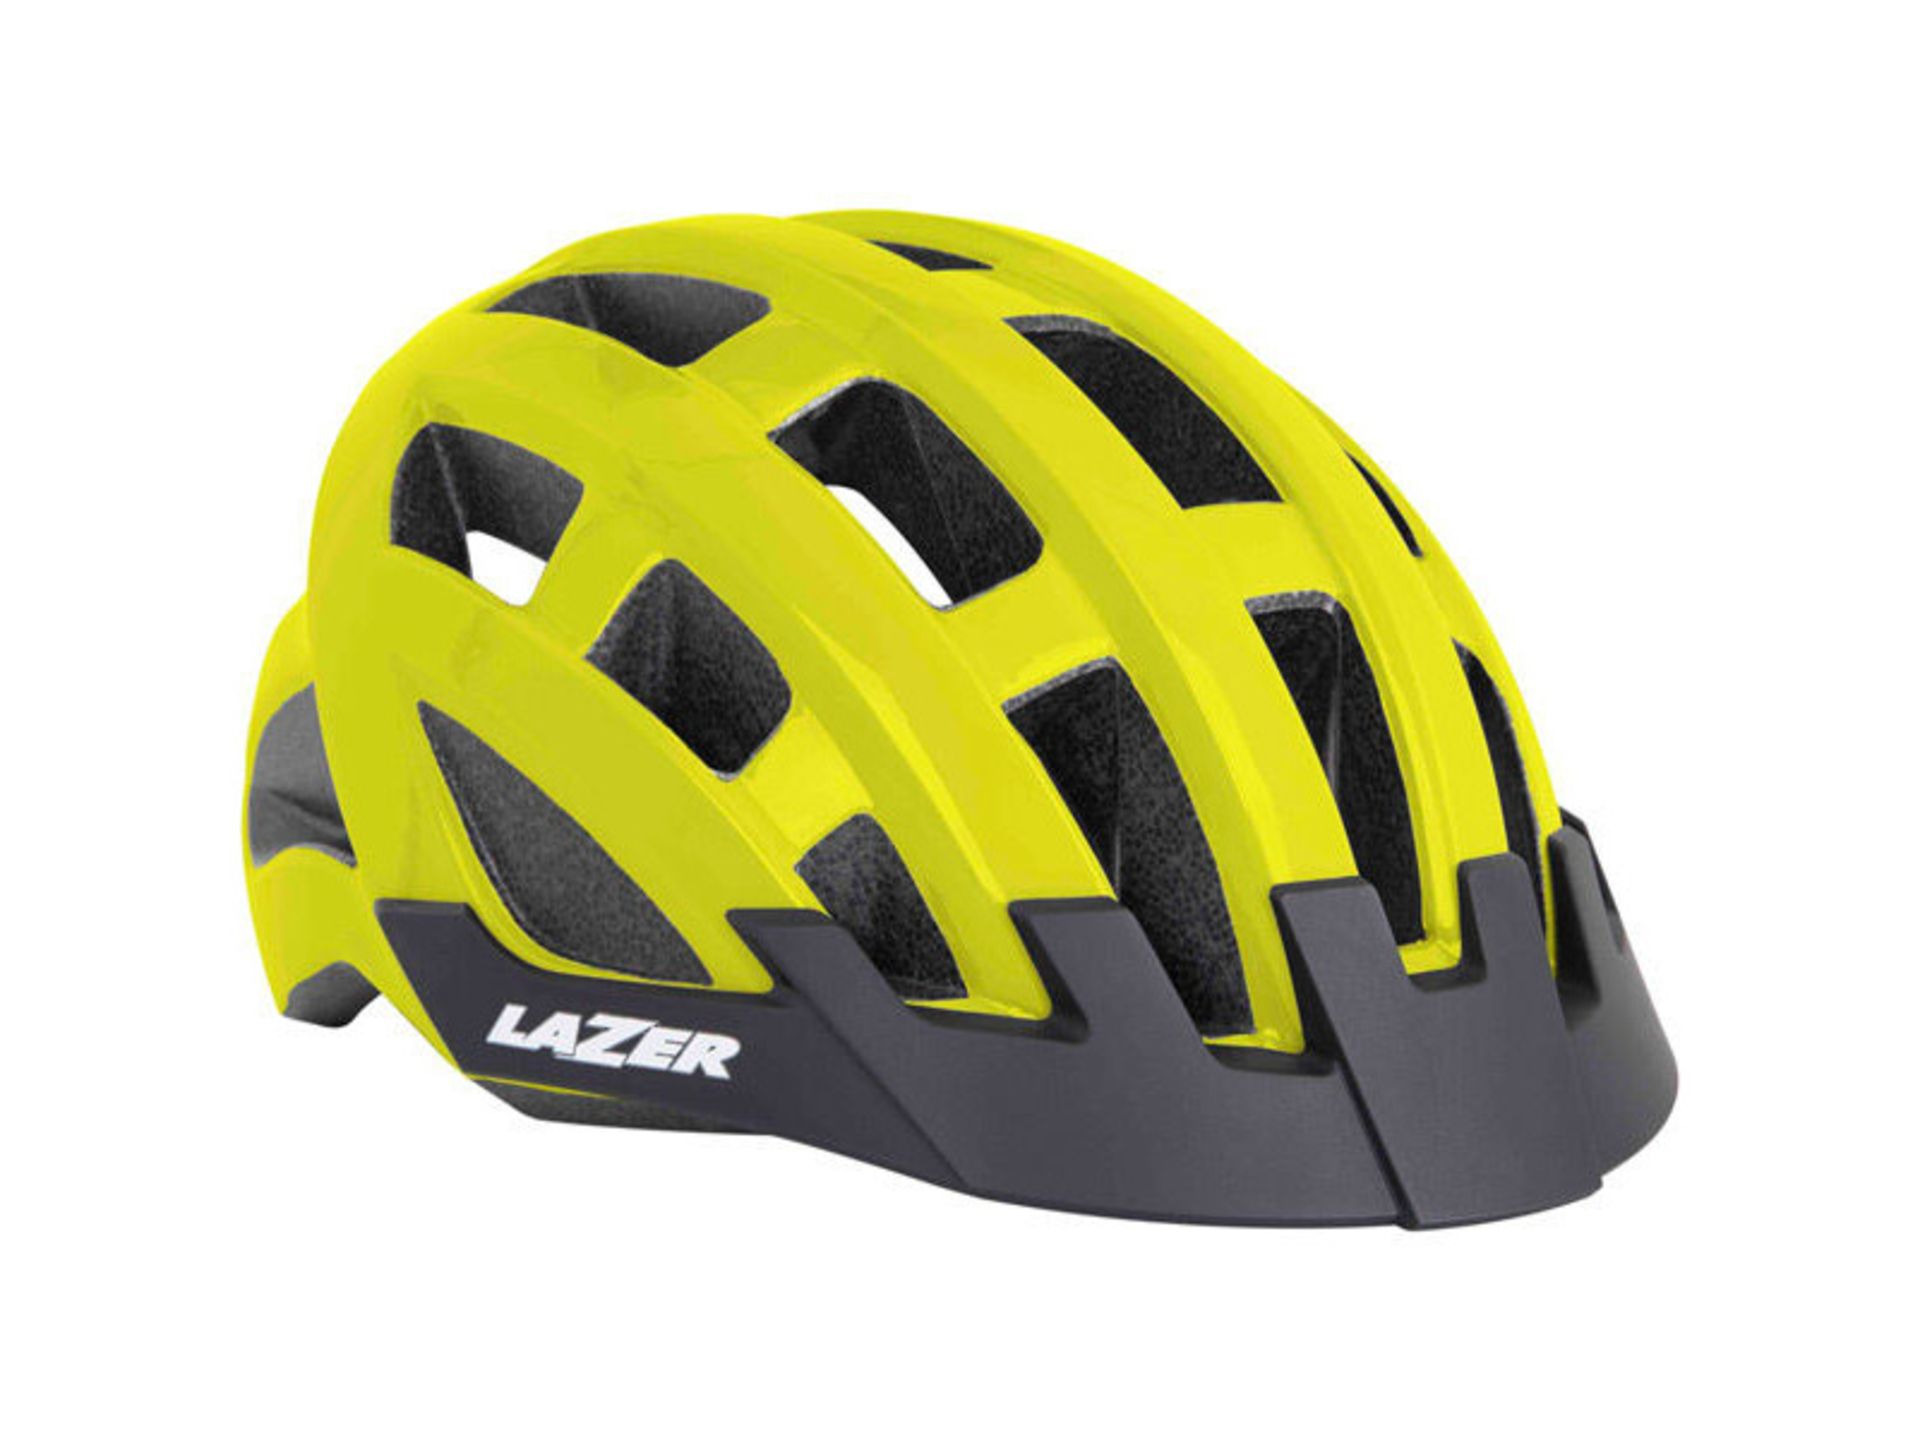 Lazer Men's Compact Cycling Flash Yellow Helmet, Uni Size 54-61cm